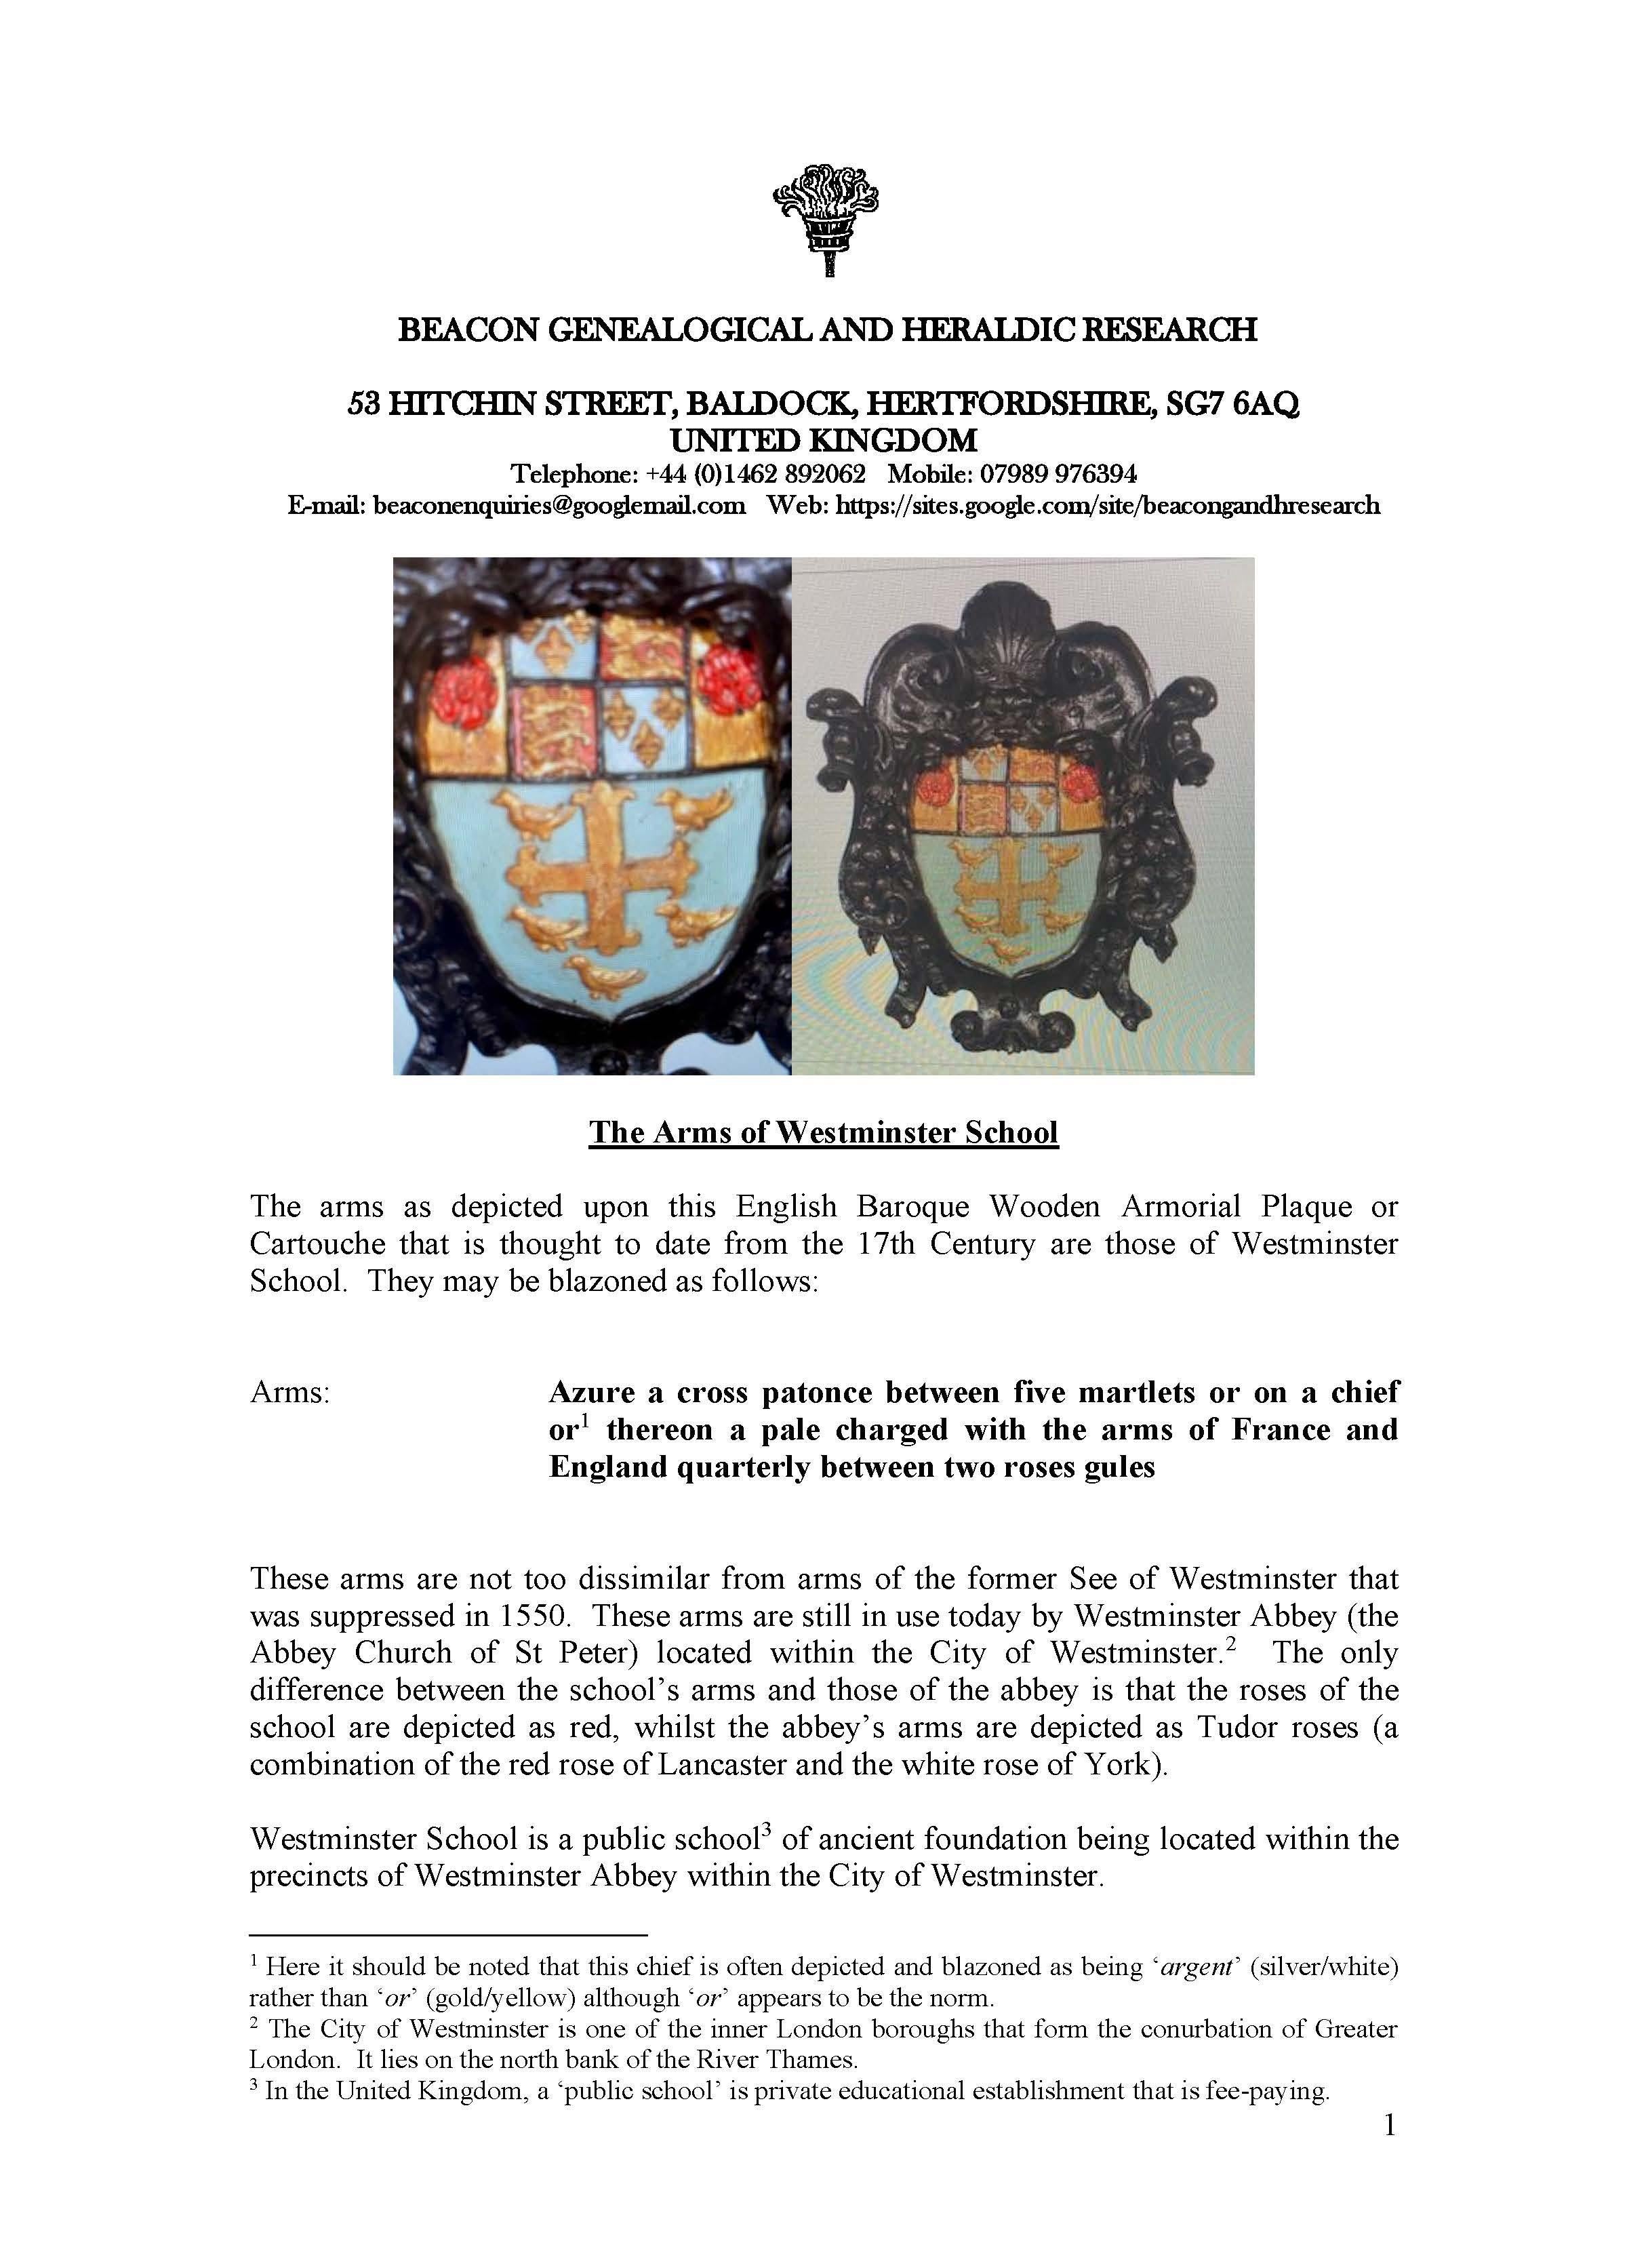 Charles II. geschnitztes Wappen der Armee der Westminster School im Angebot 2